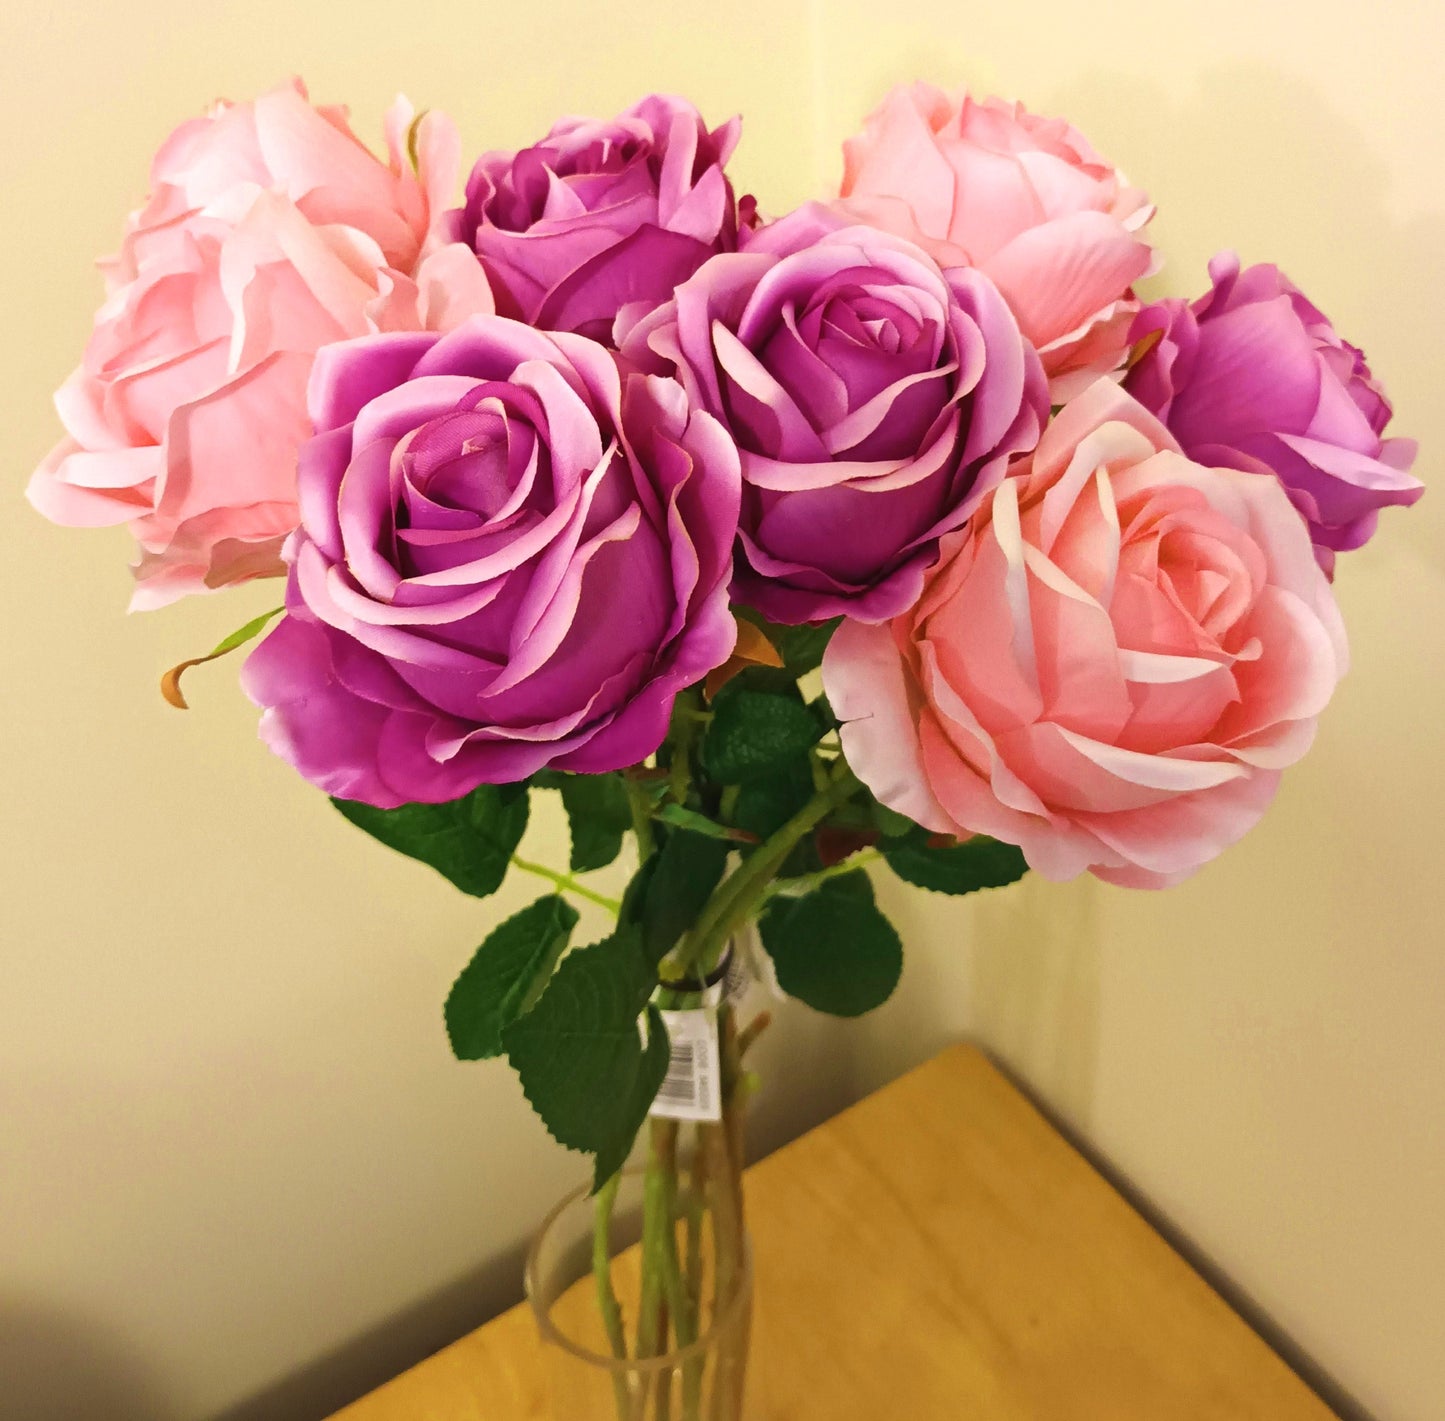 Bunch of 8 Artificial Globe Rose Flower Stems Dark and Light Pink